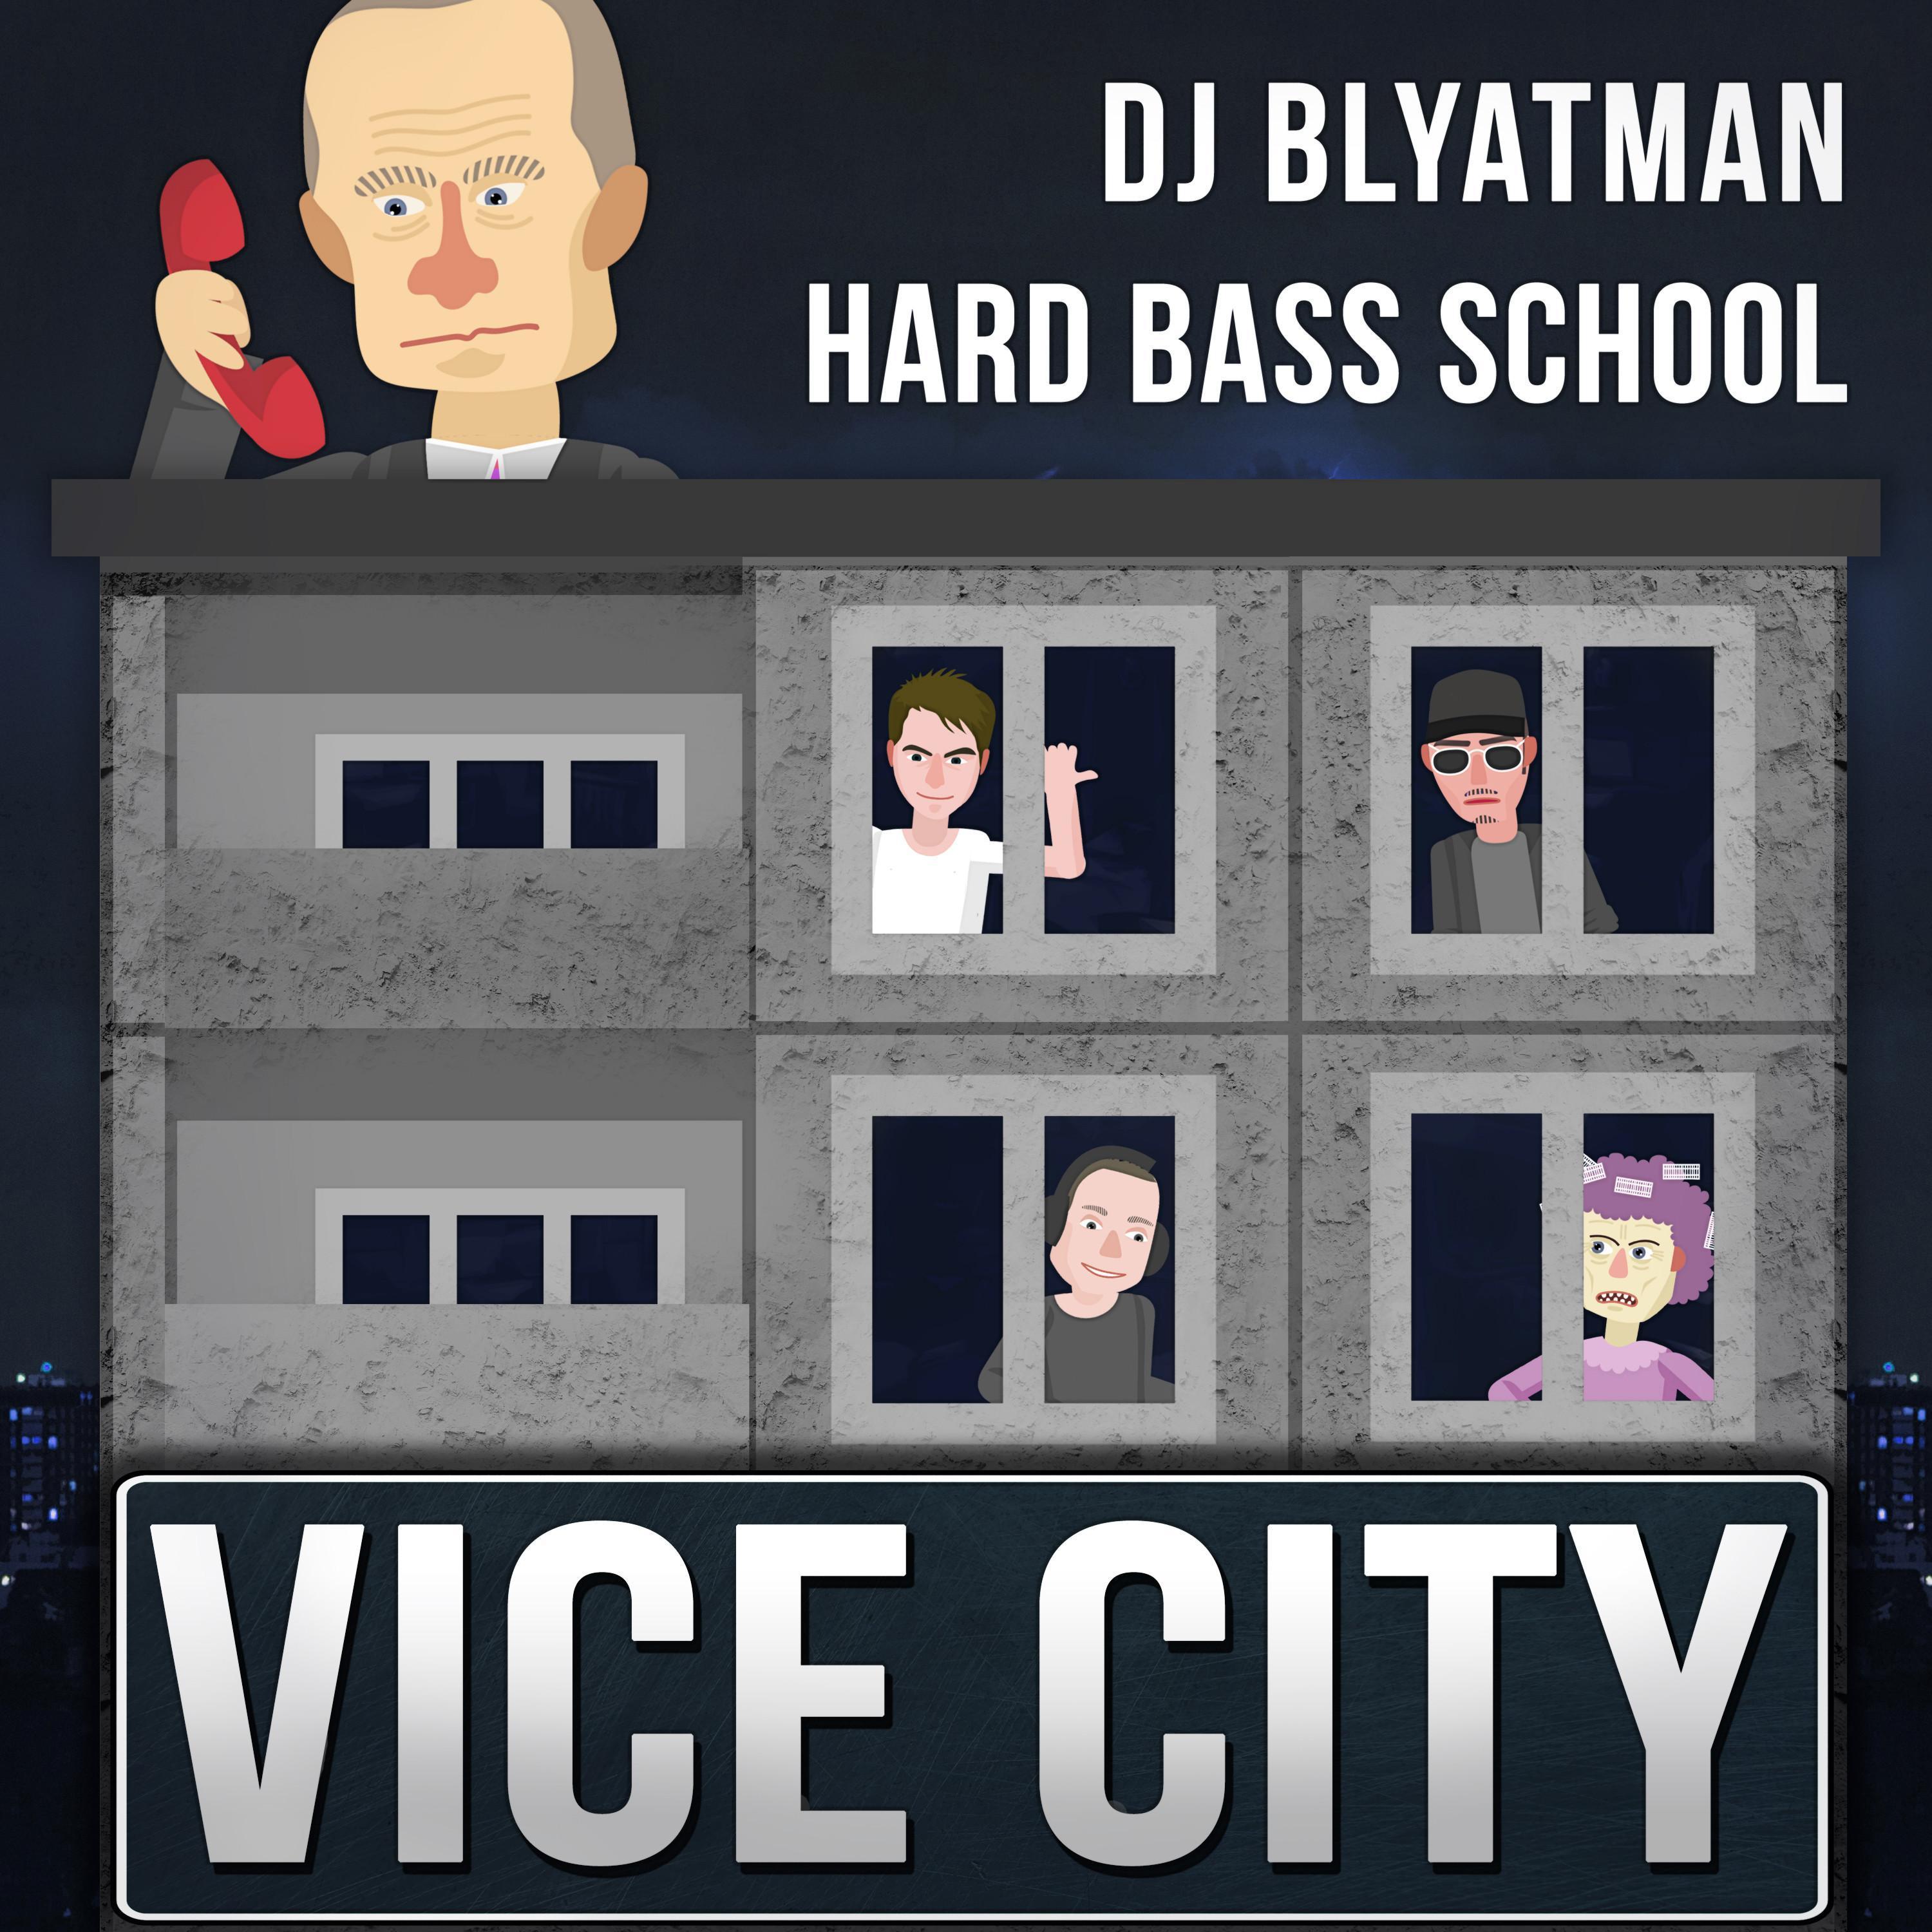 Песню hard bass. DJ Blyatman hard Bass School vice City. Хард басс скул. Школа танцев Хардбаса. DJ blytmen vice City.